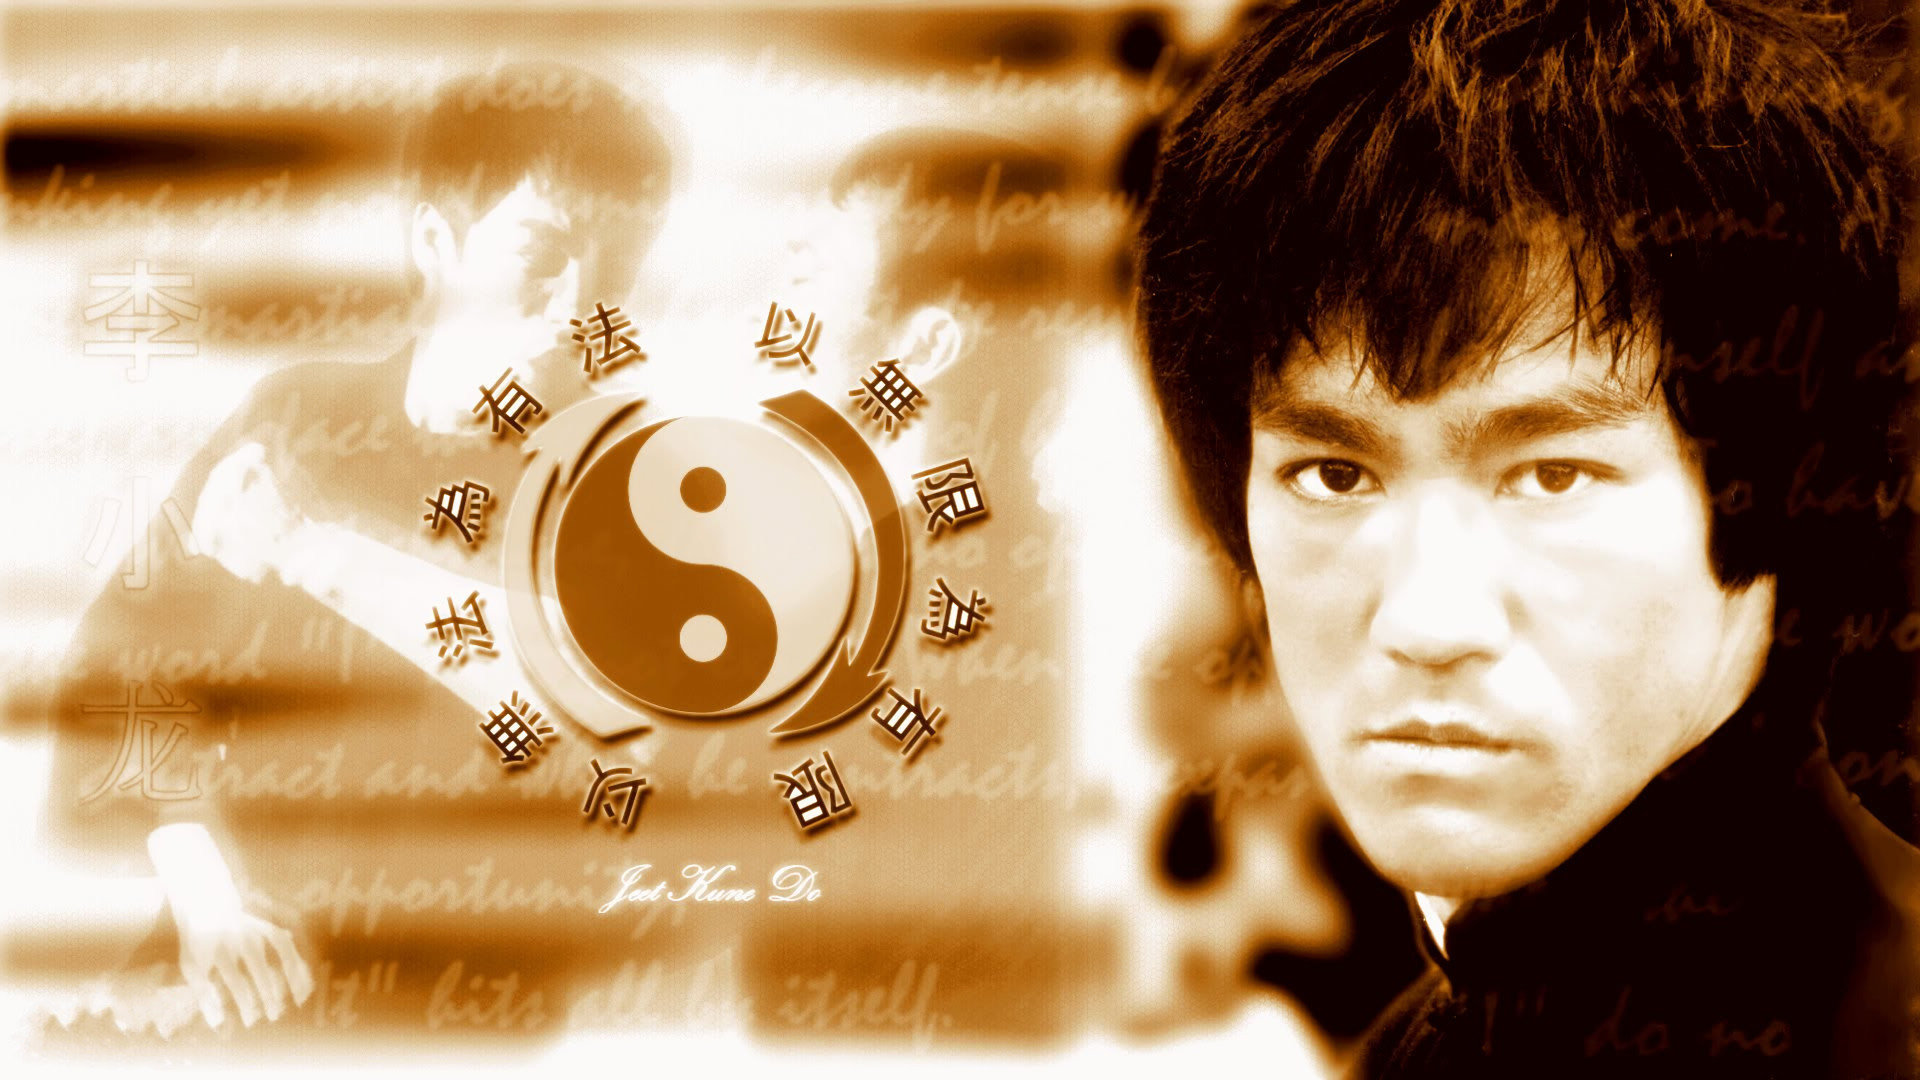 Free download Bruce Lee wallpaper ID:381079 1080p for desktop